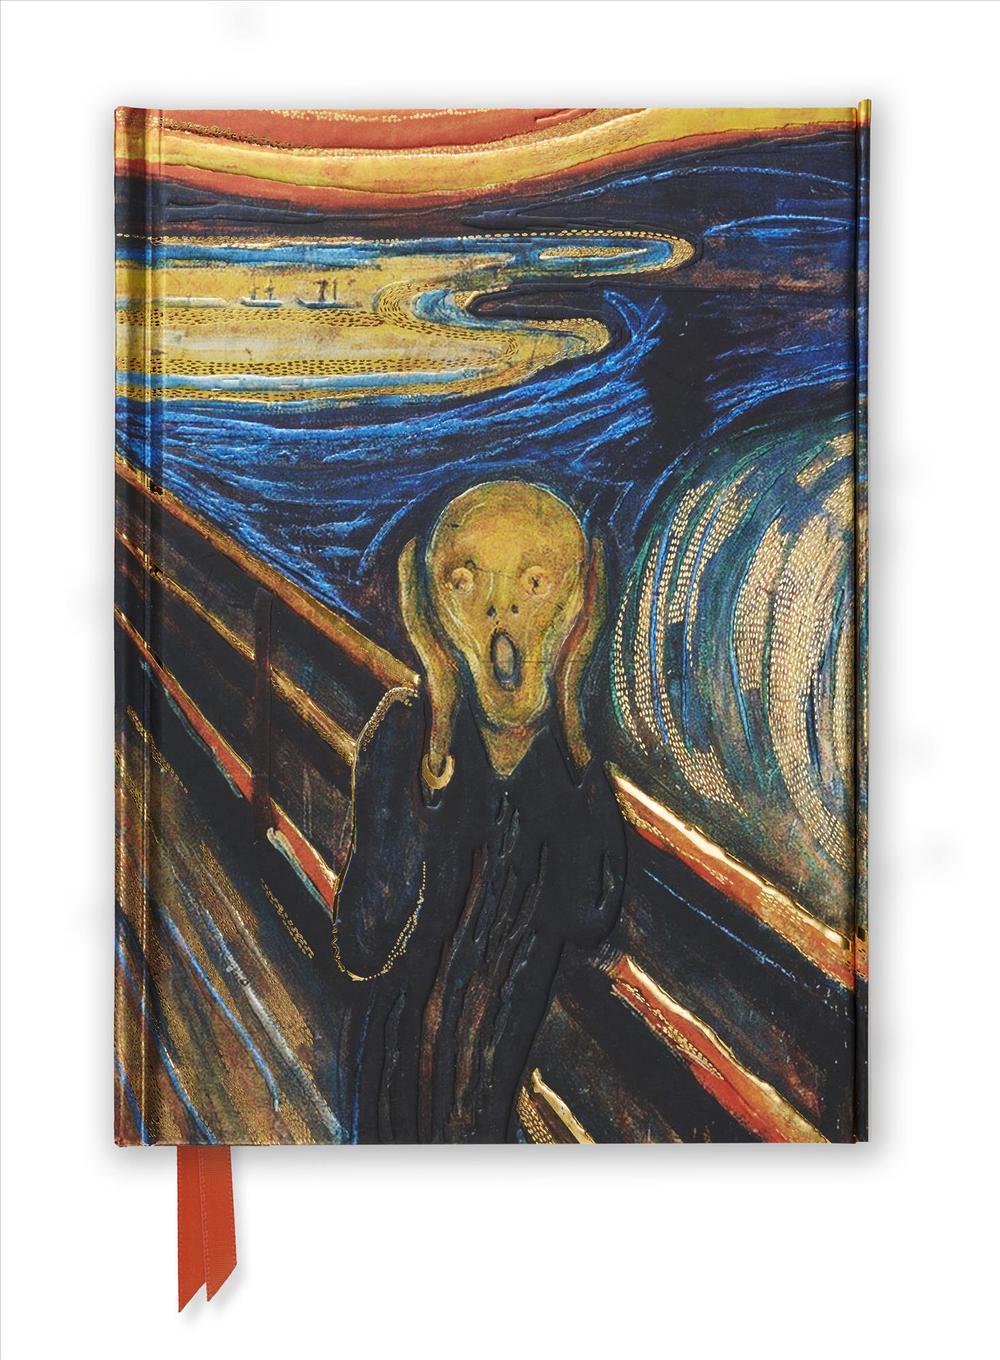 Munch's Scream journal